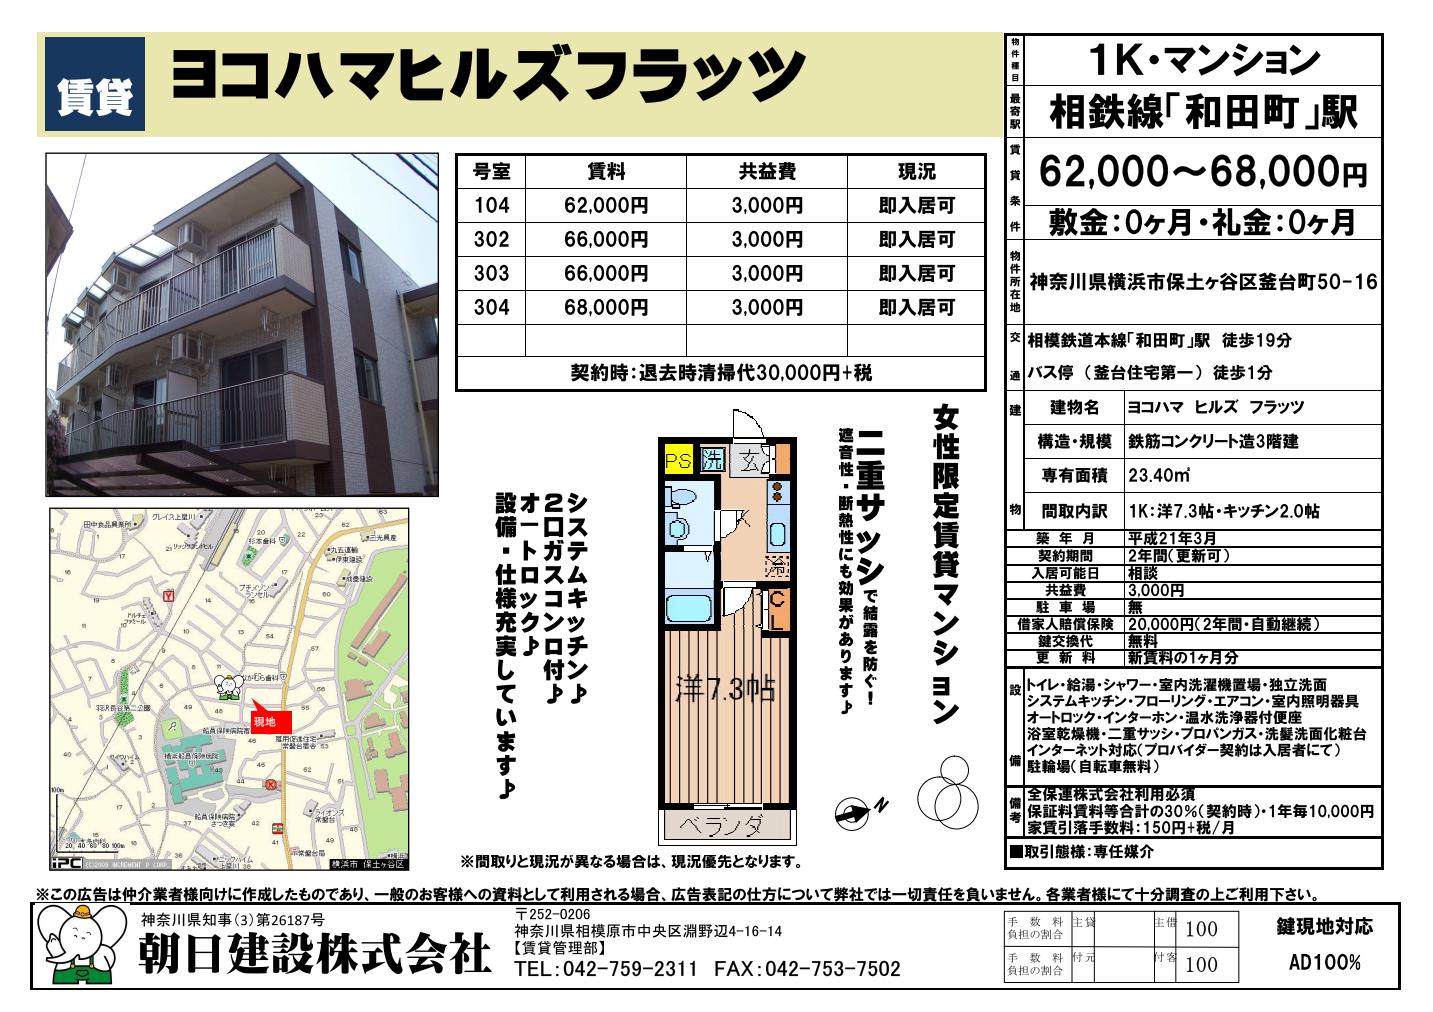 http://www.asahi21.co.jp/yaruzou-fudosan/20151105/yokohama%20hills%20flats.jpg